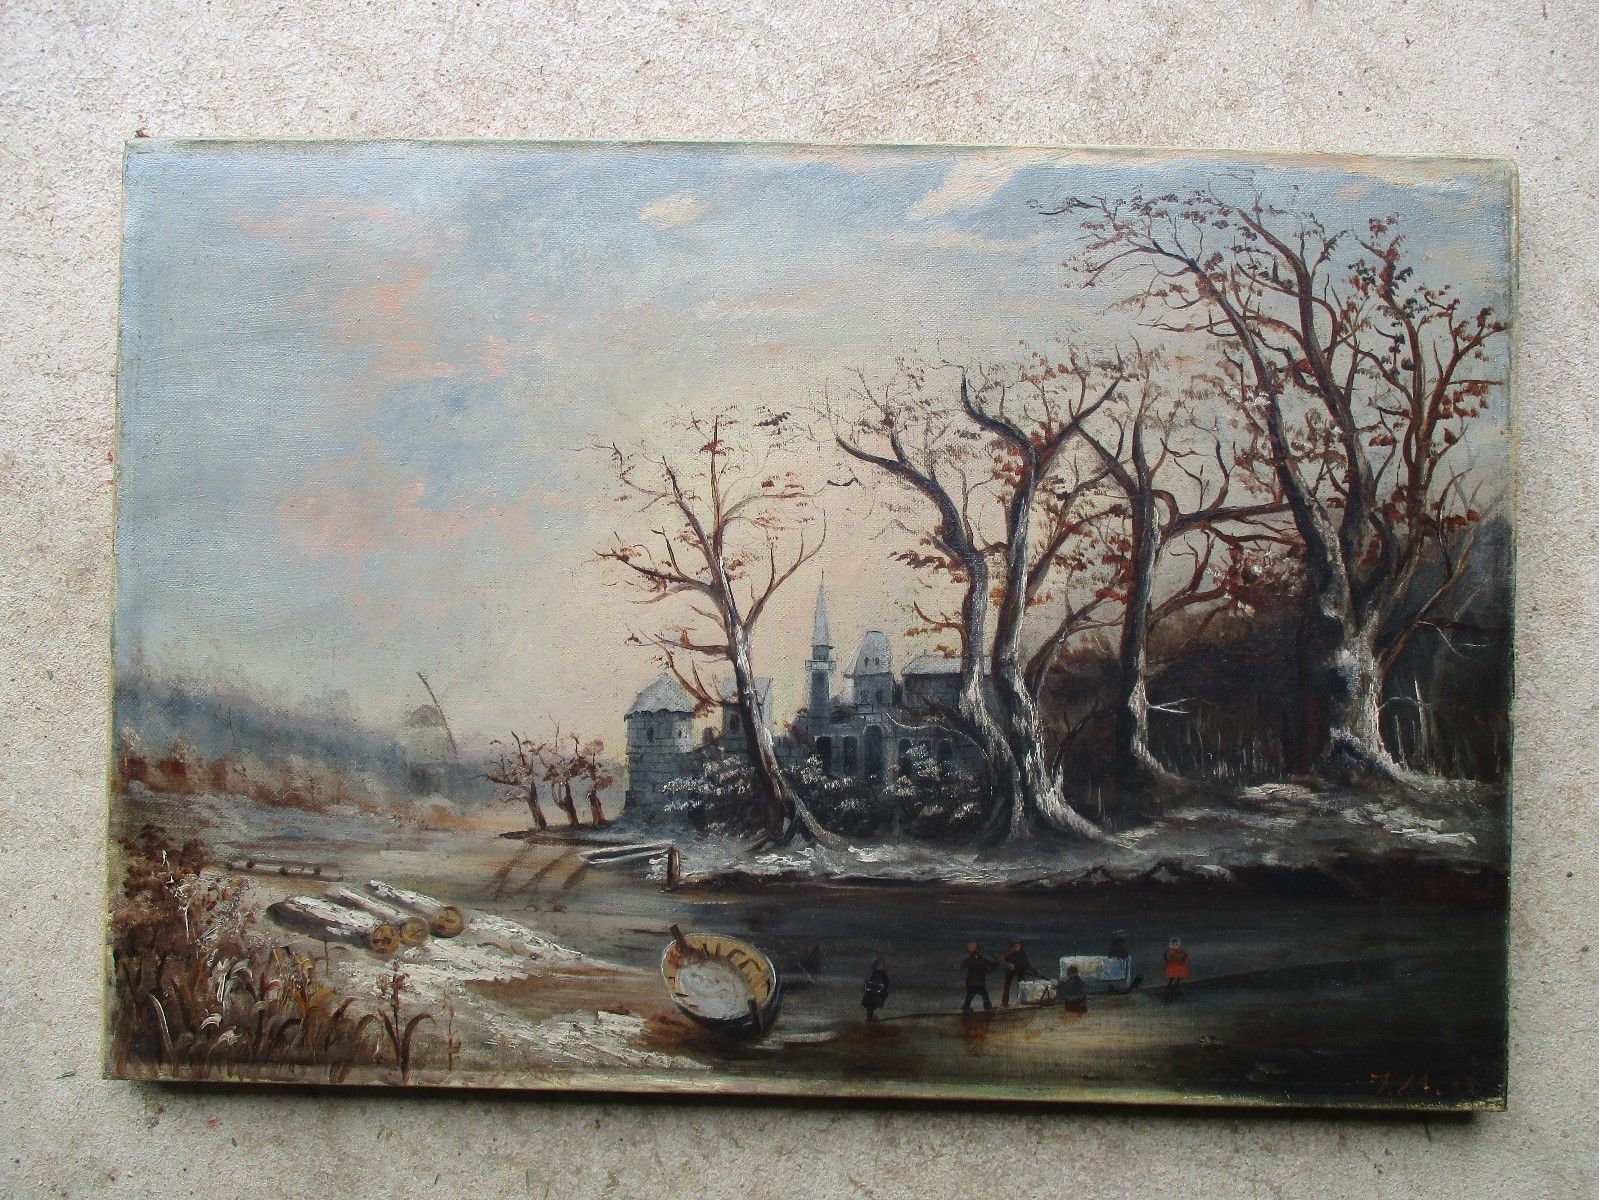 Antique 19thC Oil on Canvas Folk Art Ice Harvesting Landscape Painting